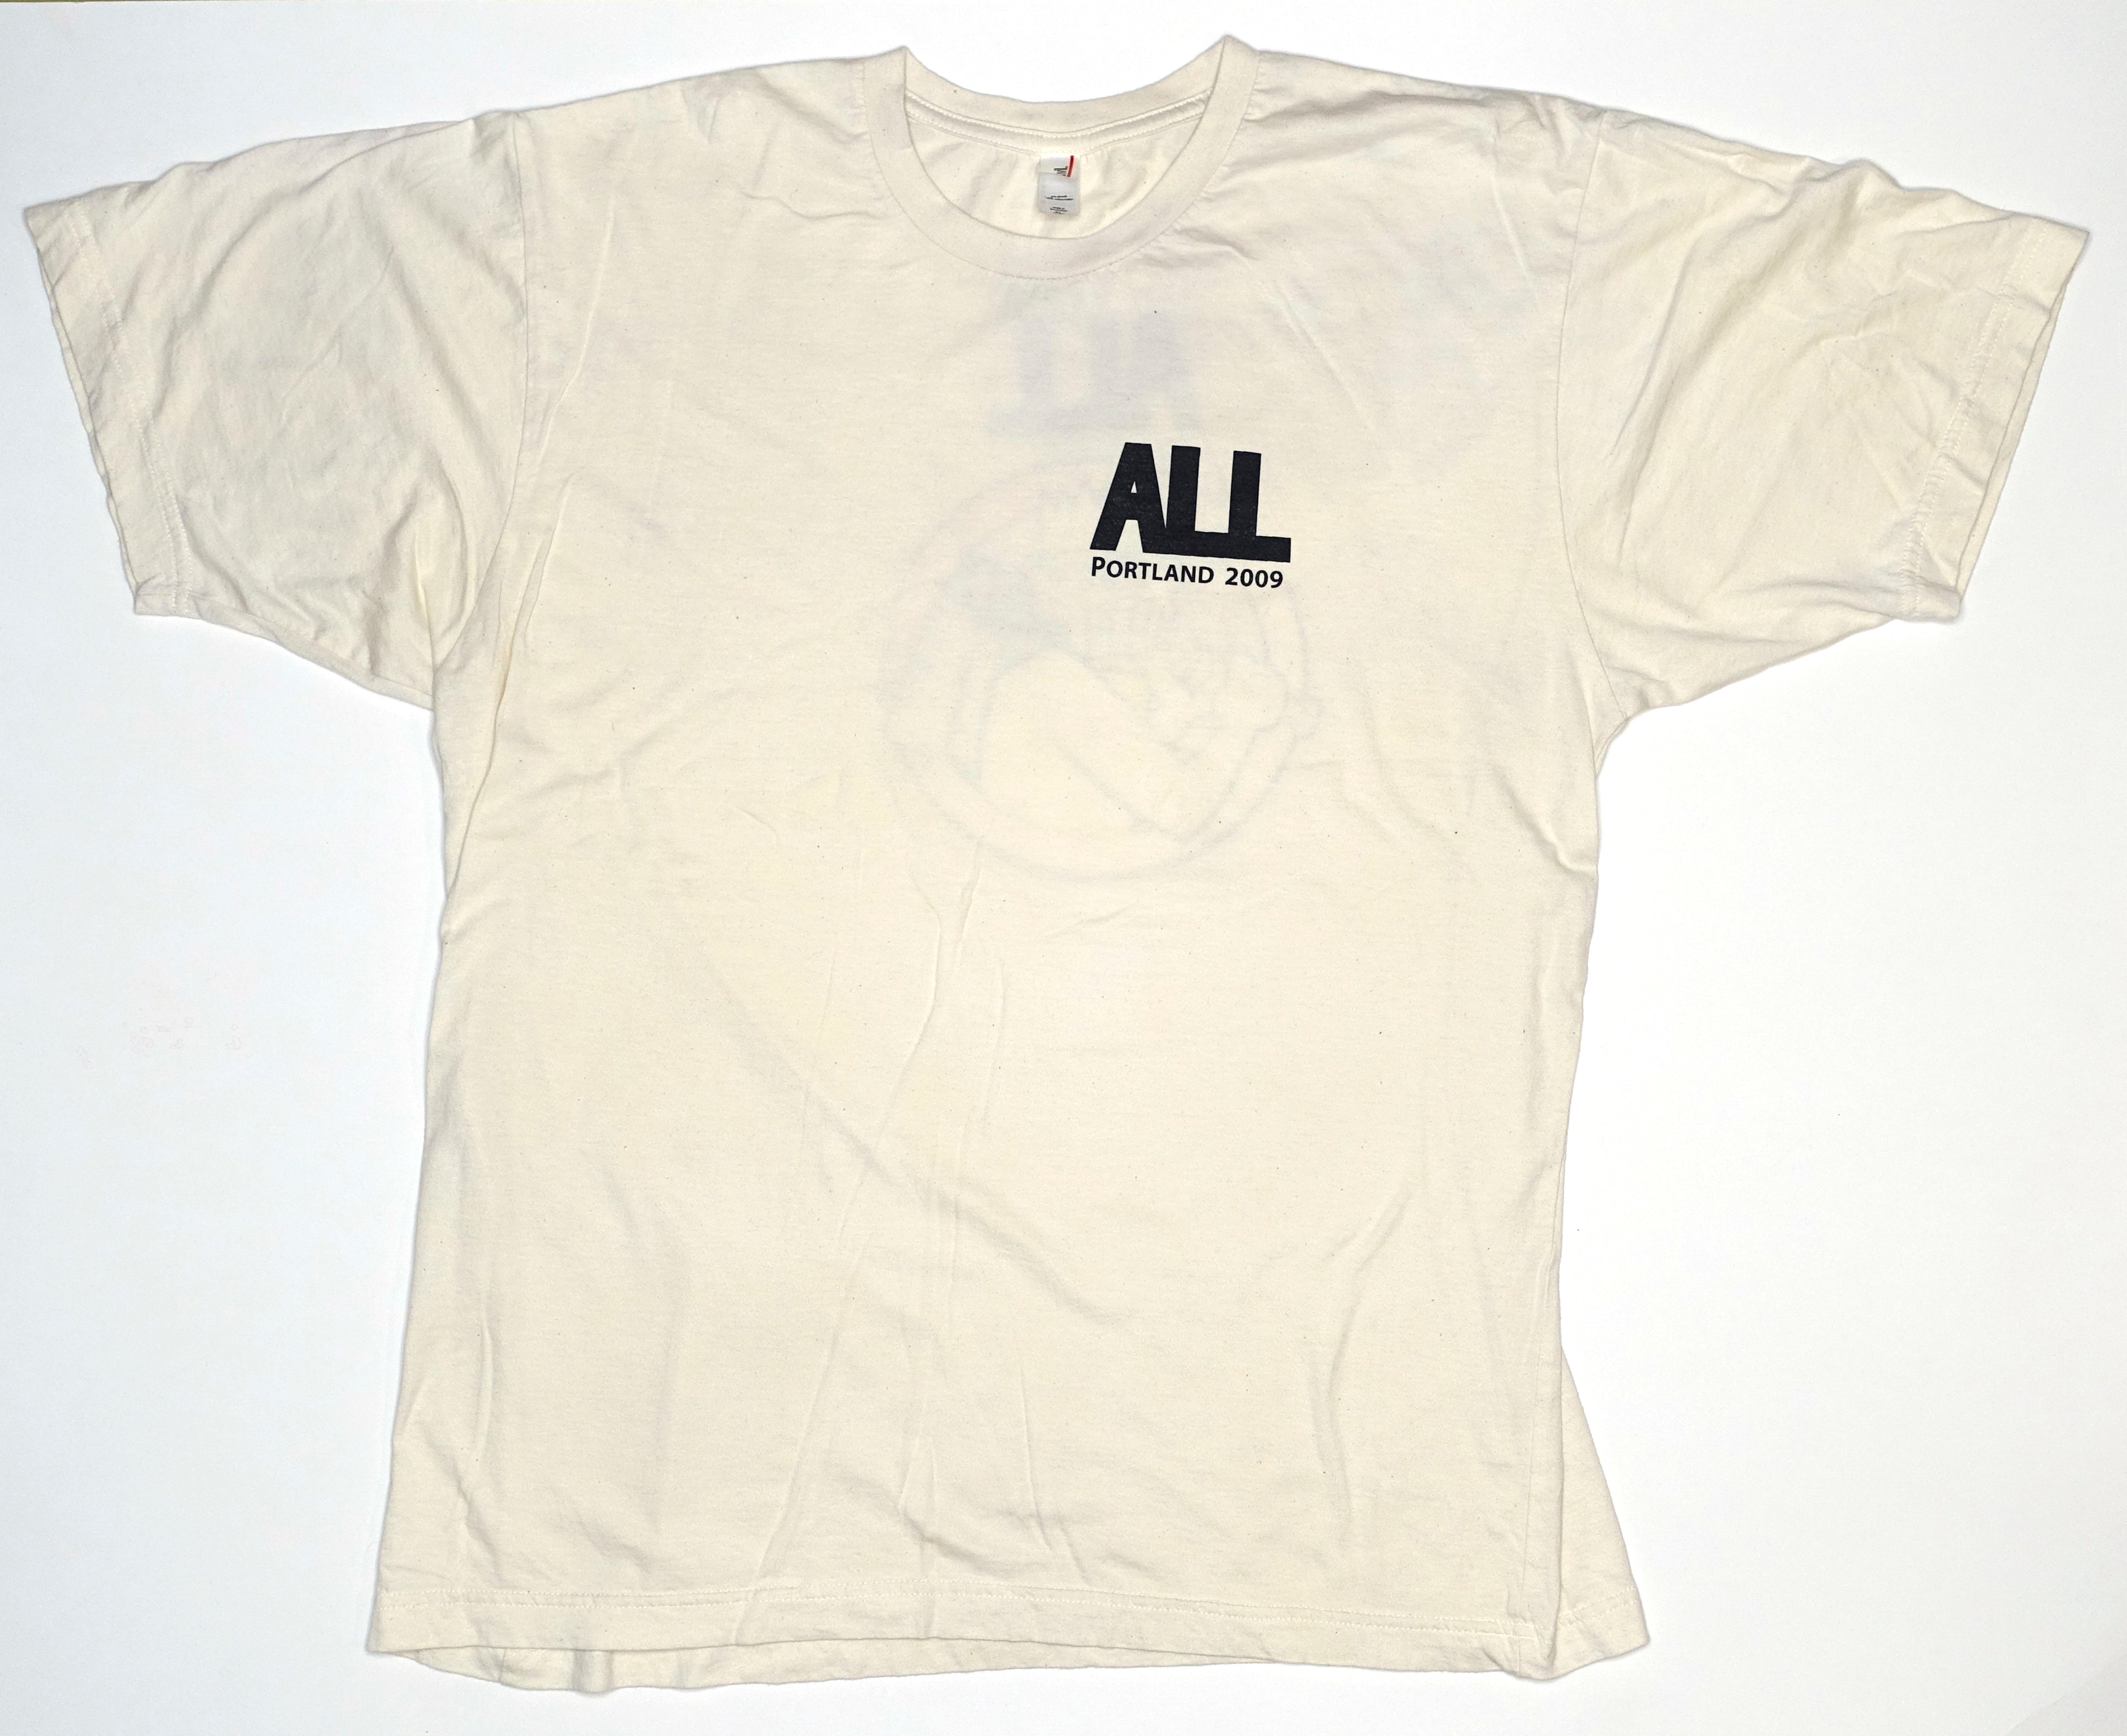 ALL - Portland Batroy 2009 Tour Shirt Size XL